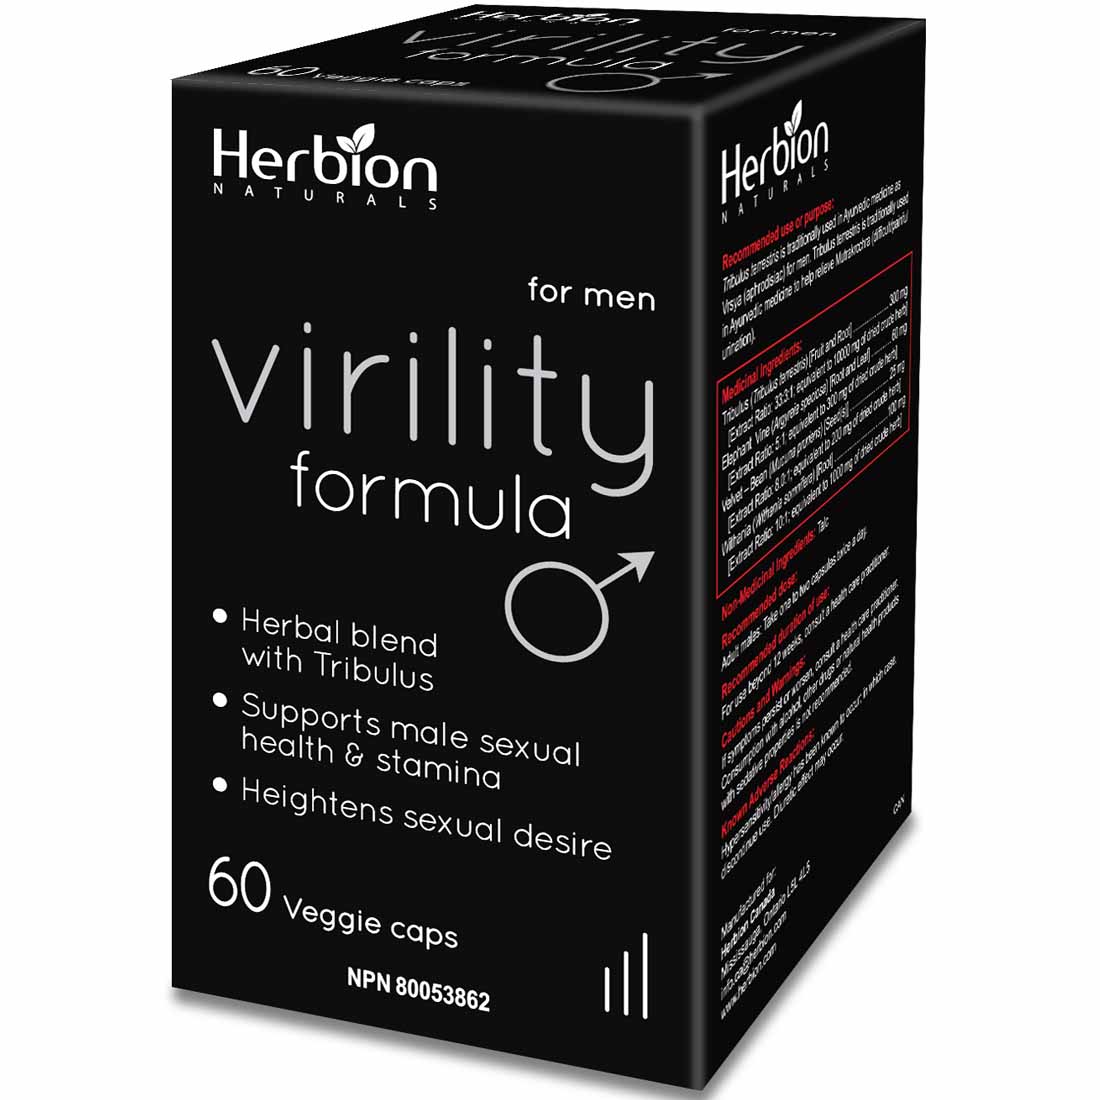 Herbion Virility Formula, 60 Veggie Caps